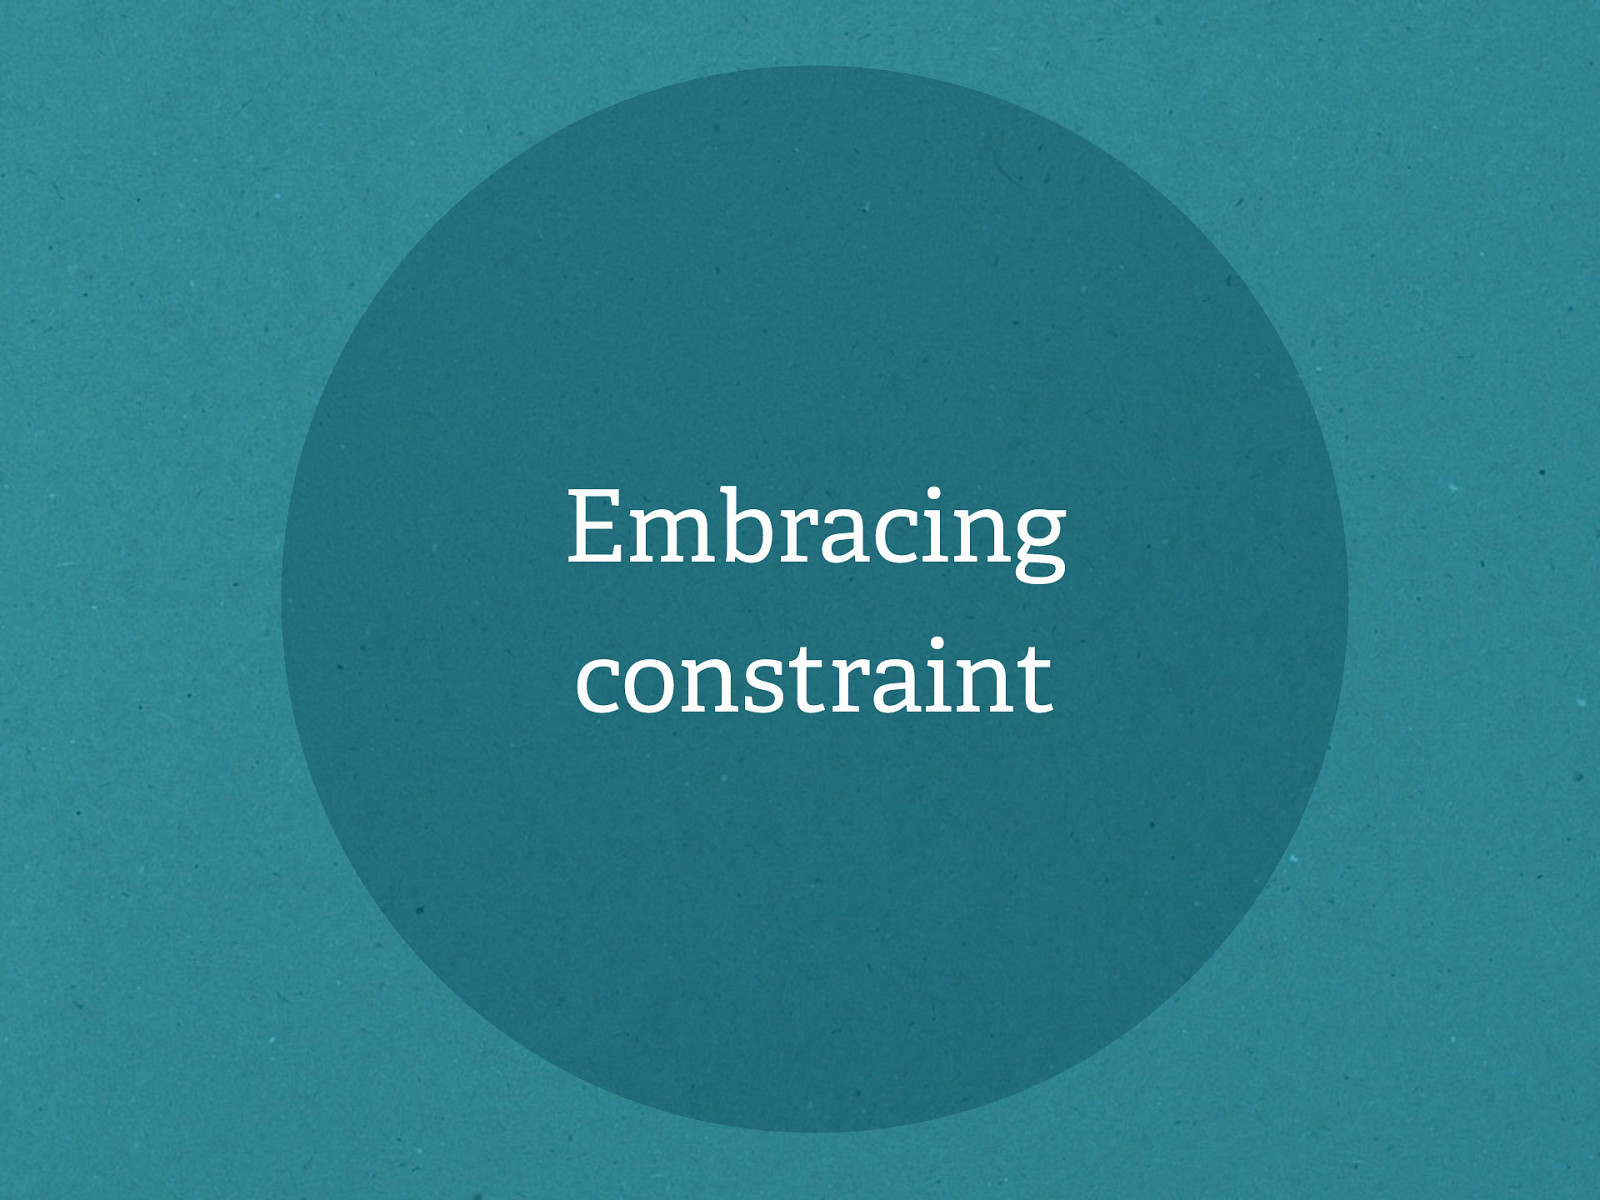 Embracing constraint